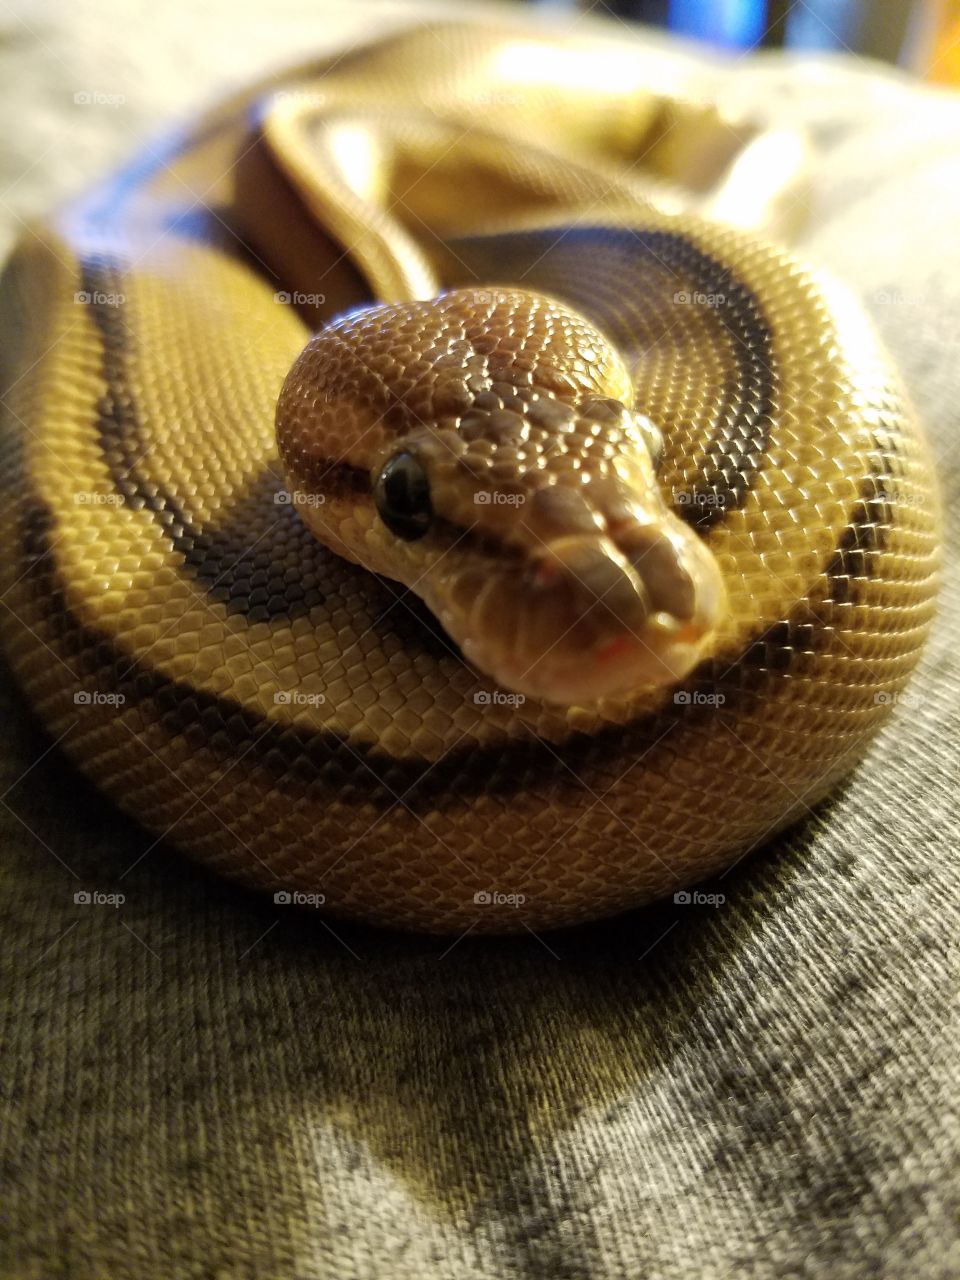 my ball python Macchiato relaxing on my pillow